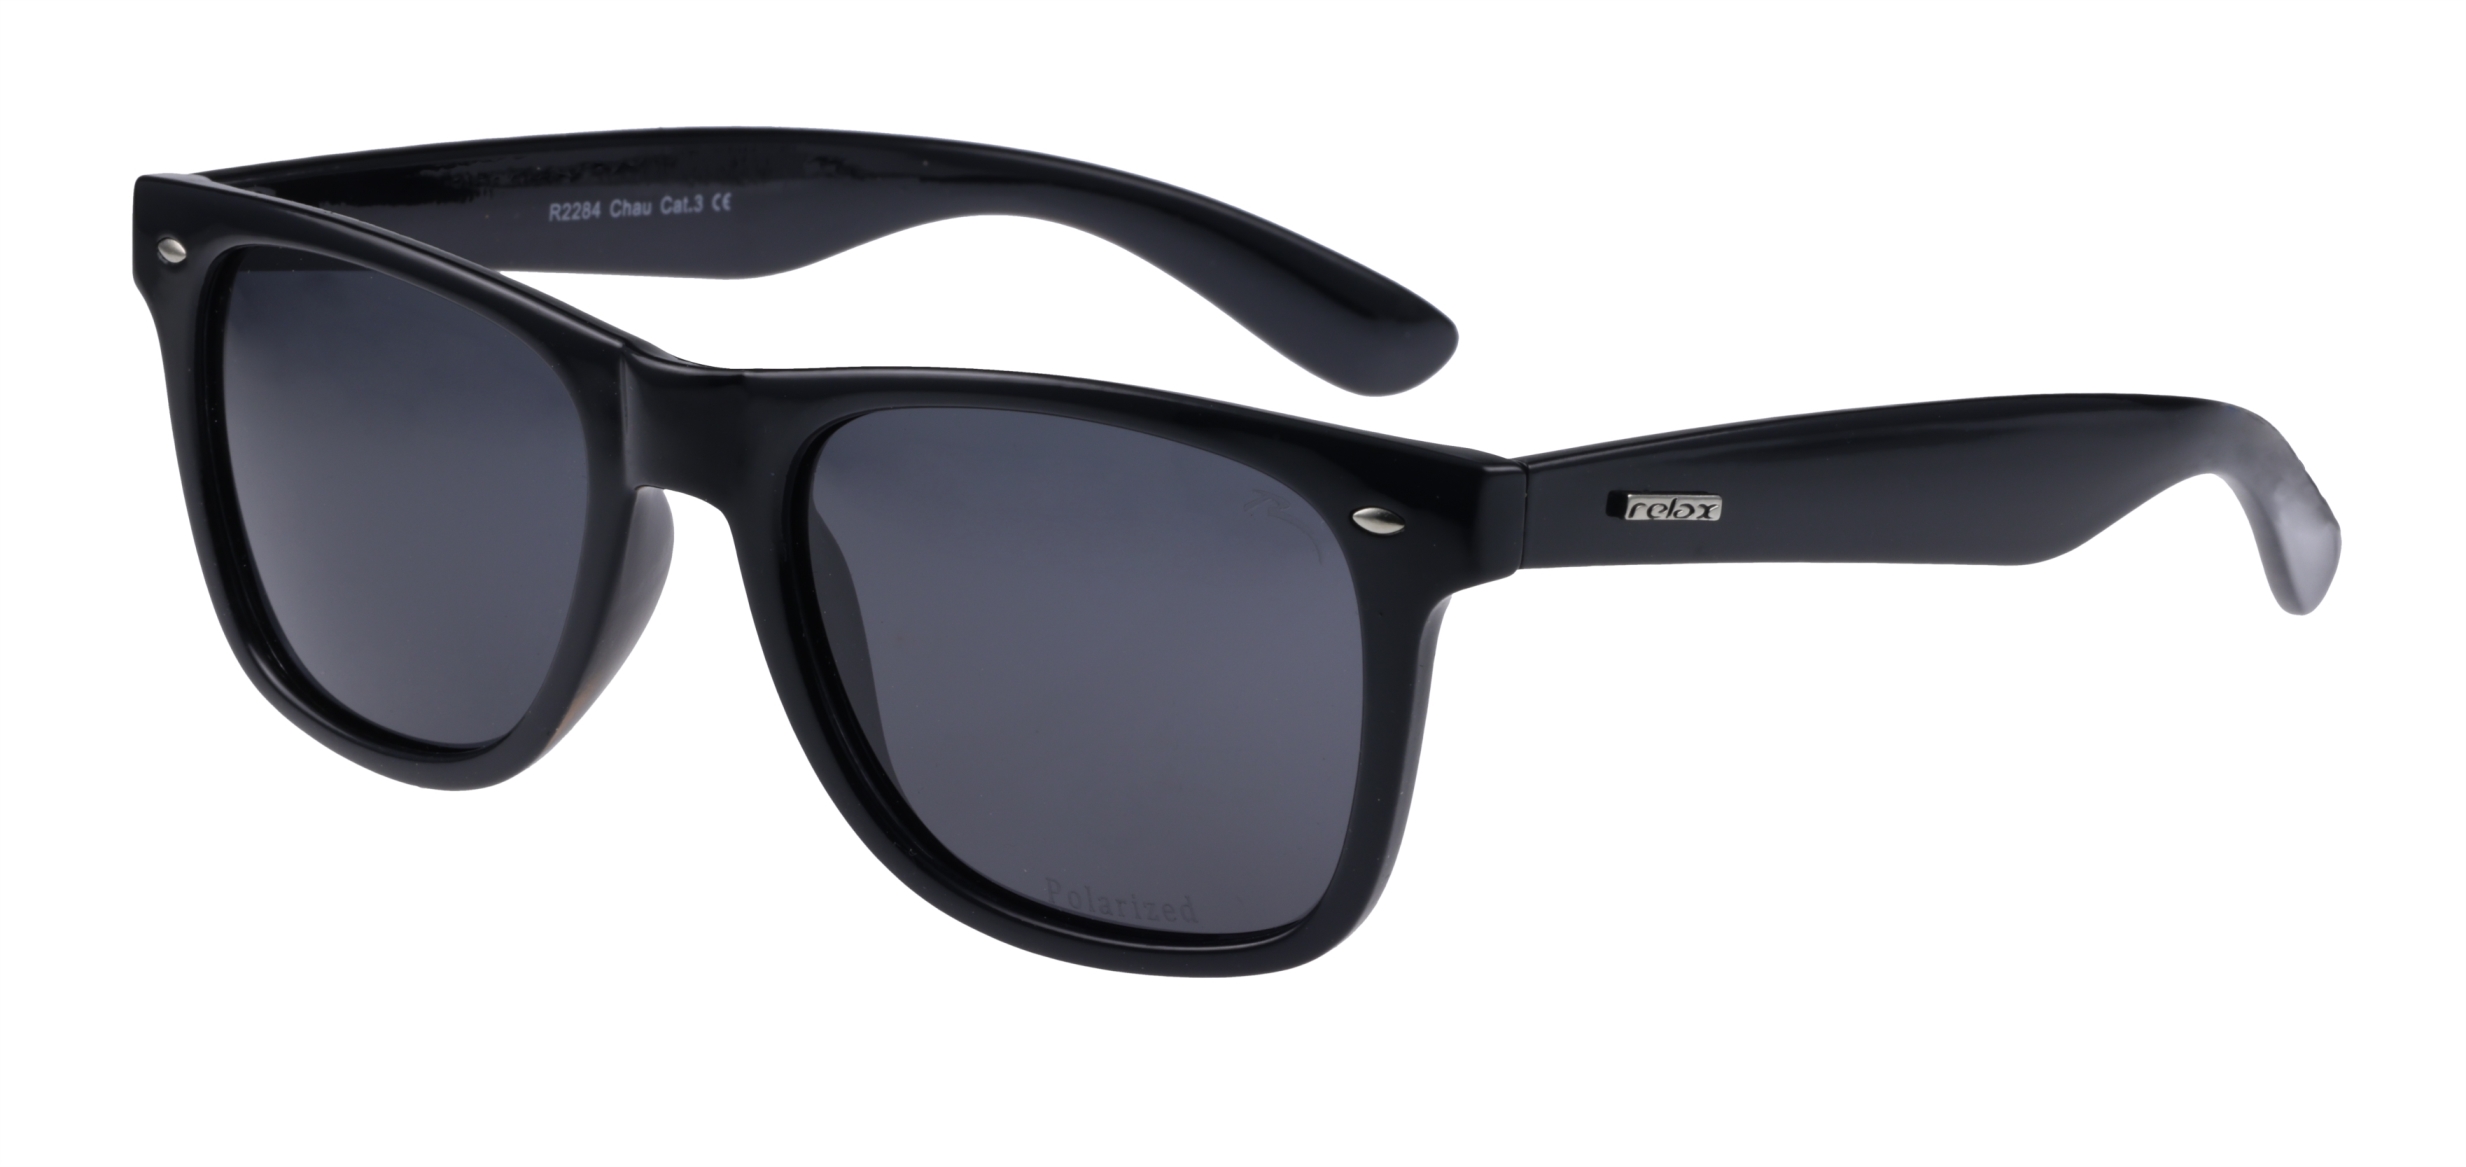 Polarized sunglasses  Relax Chau R2284